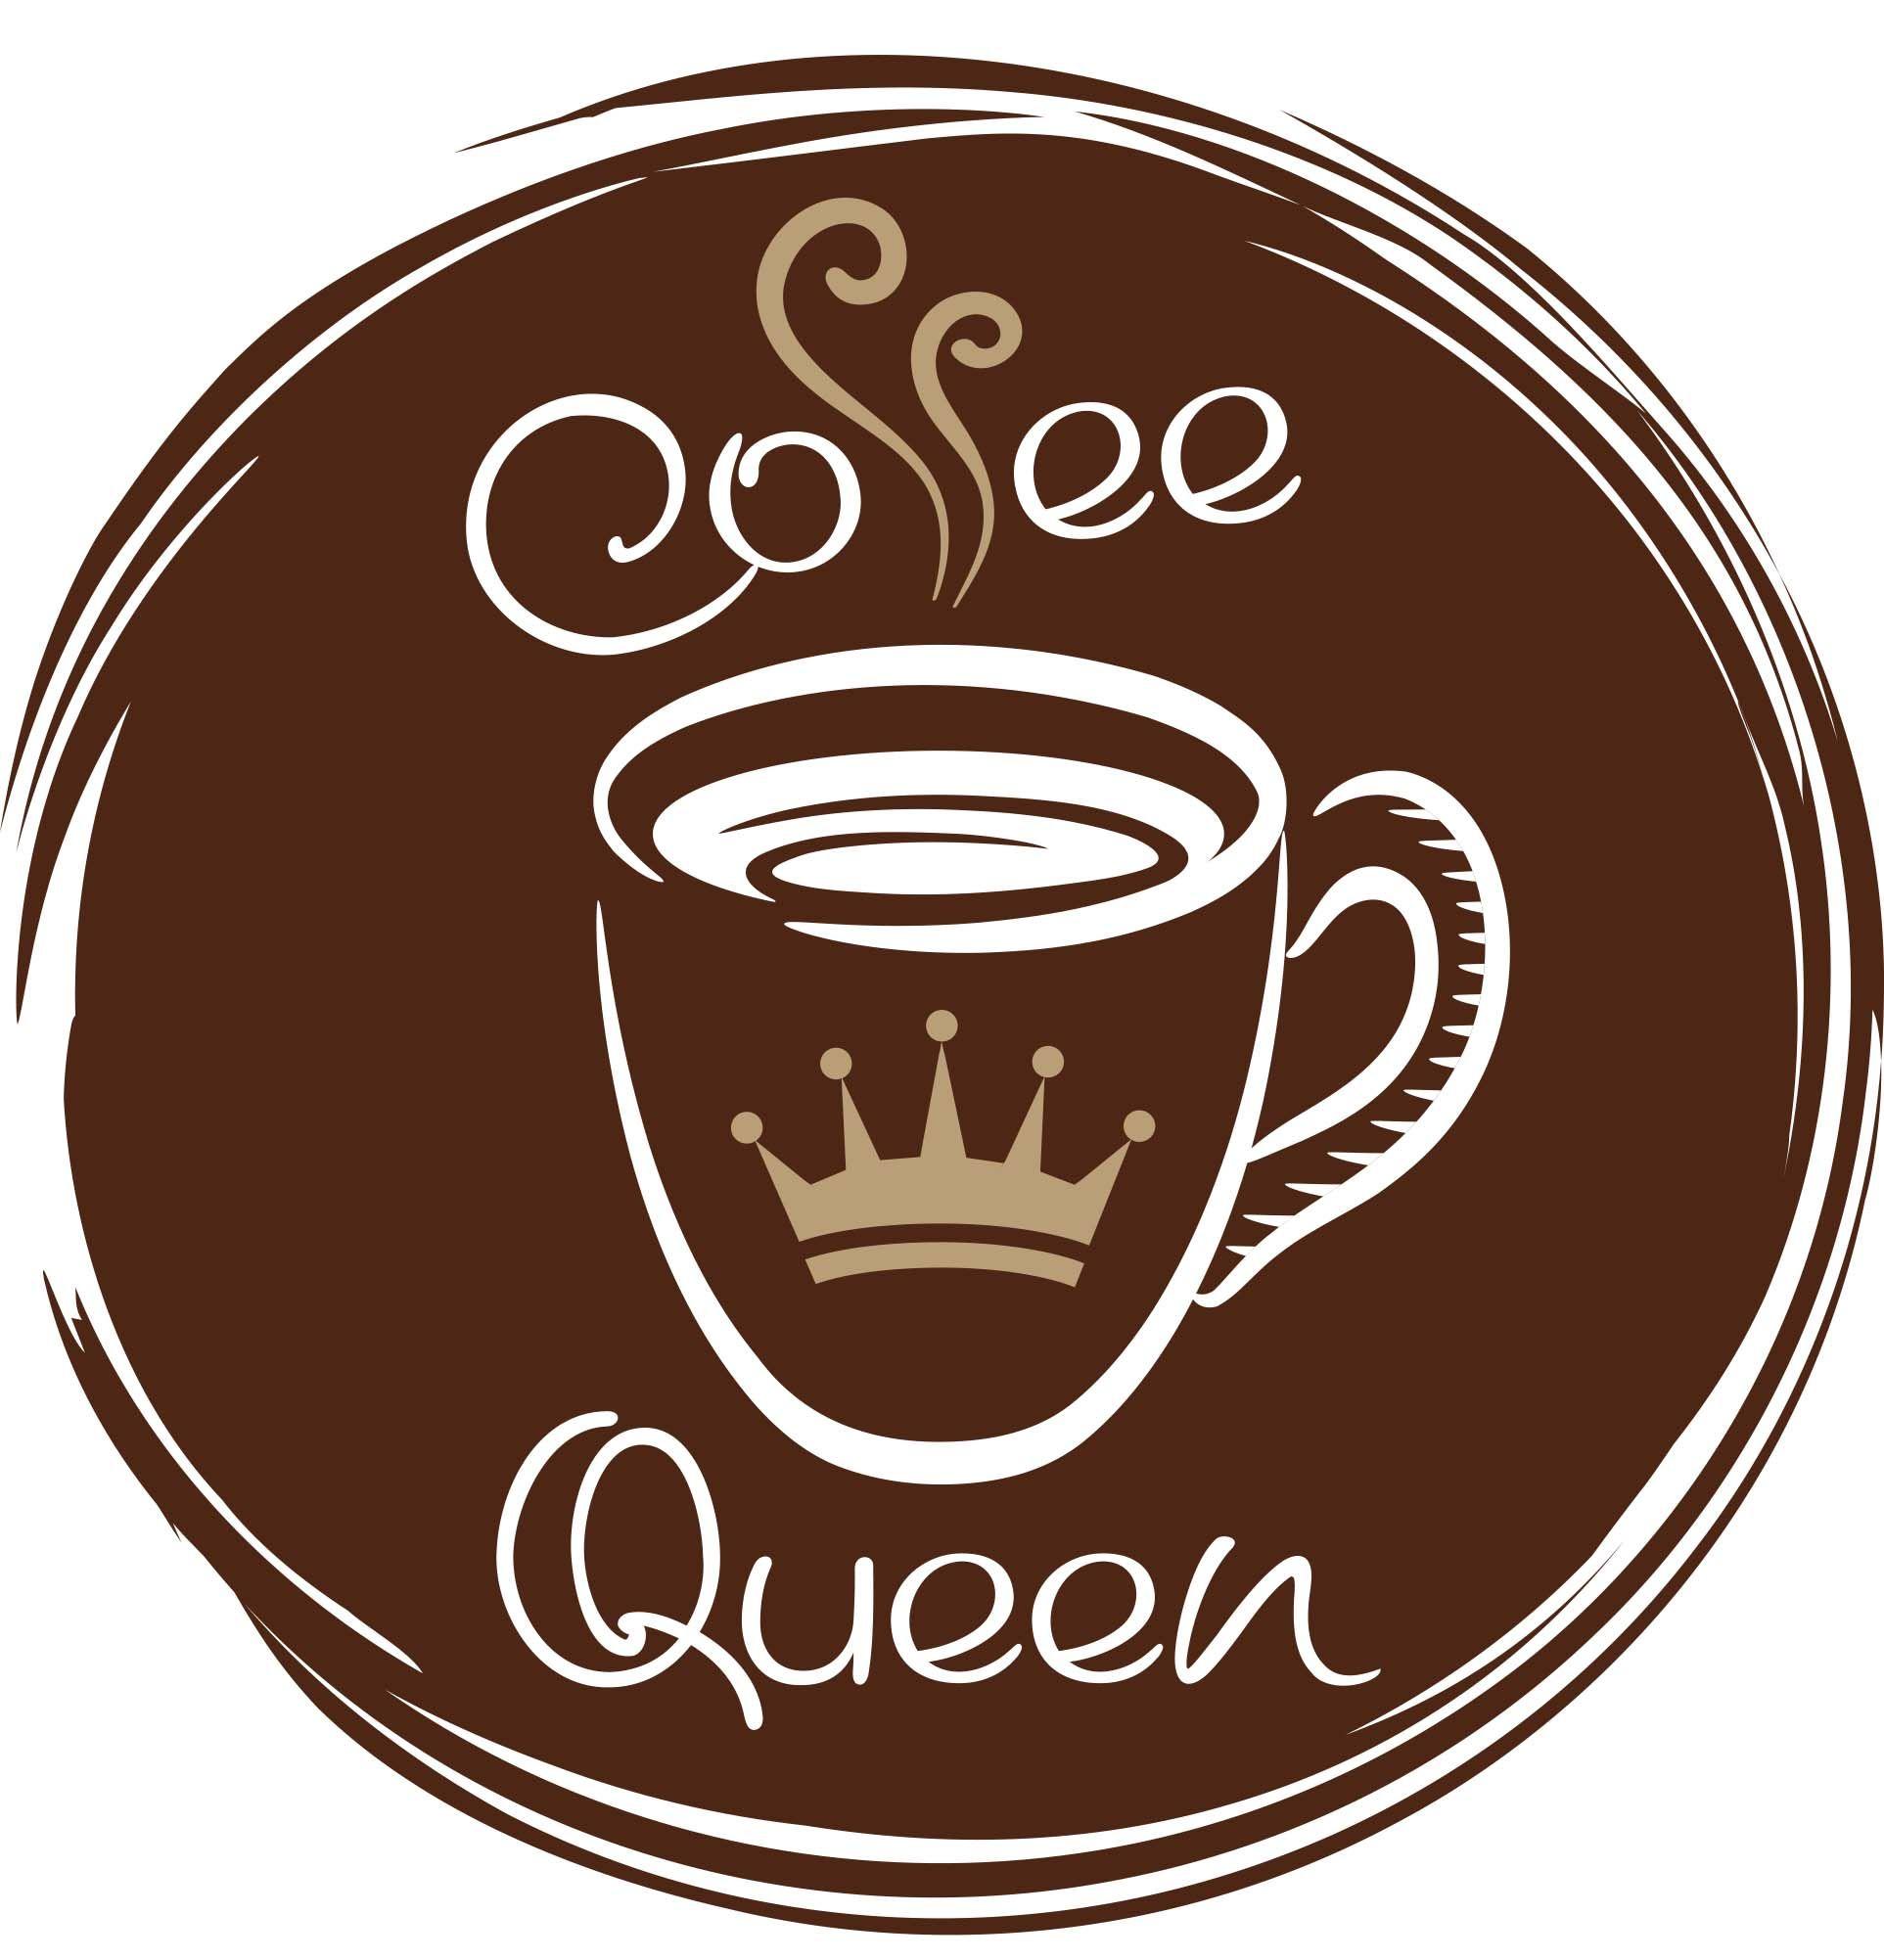 Brown Logo - Coffe Queen Brown logo - Queen Square